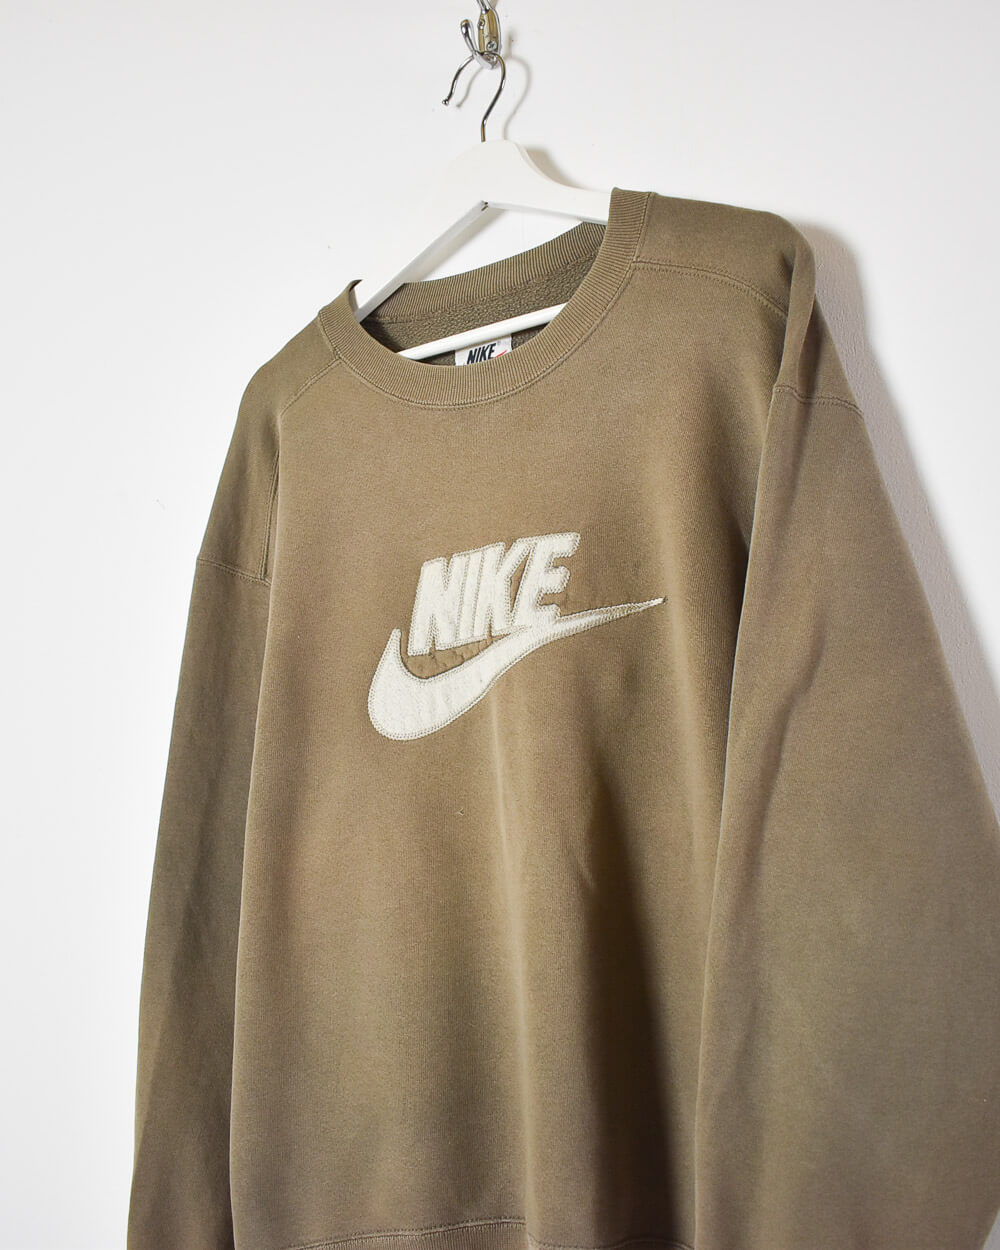 Khaki Nike Sweatshirt - Small